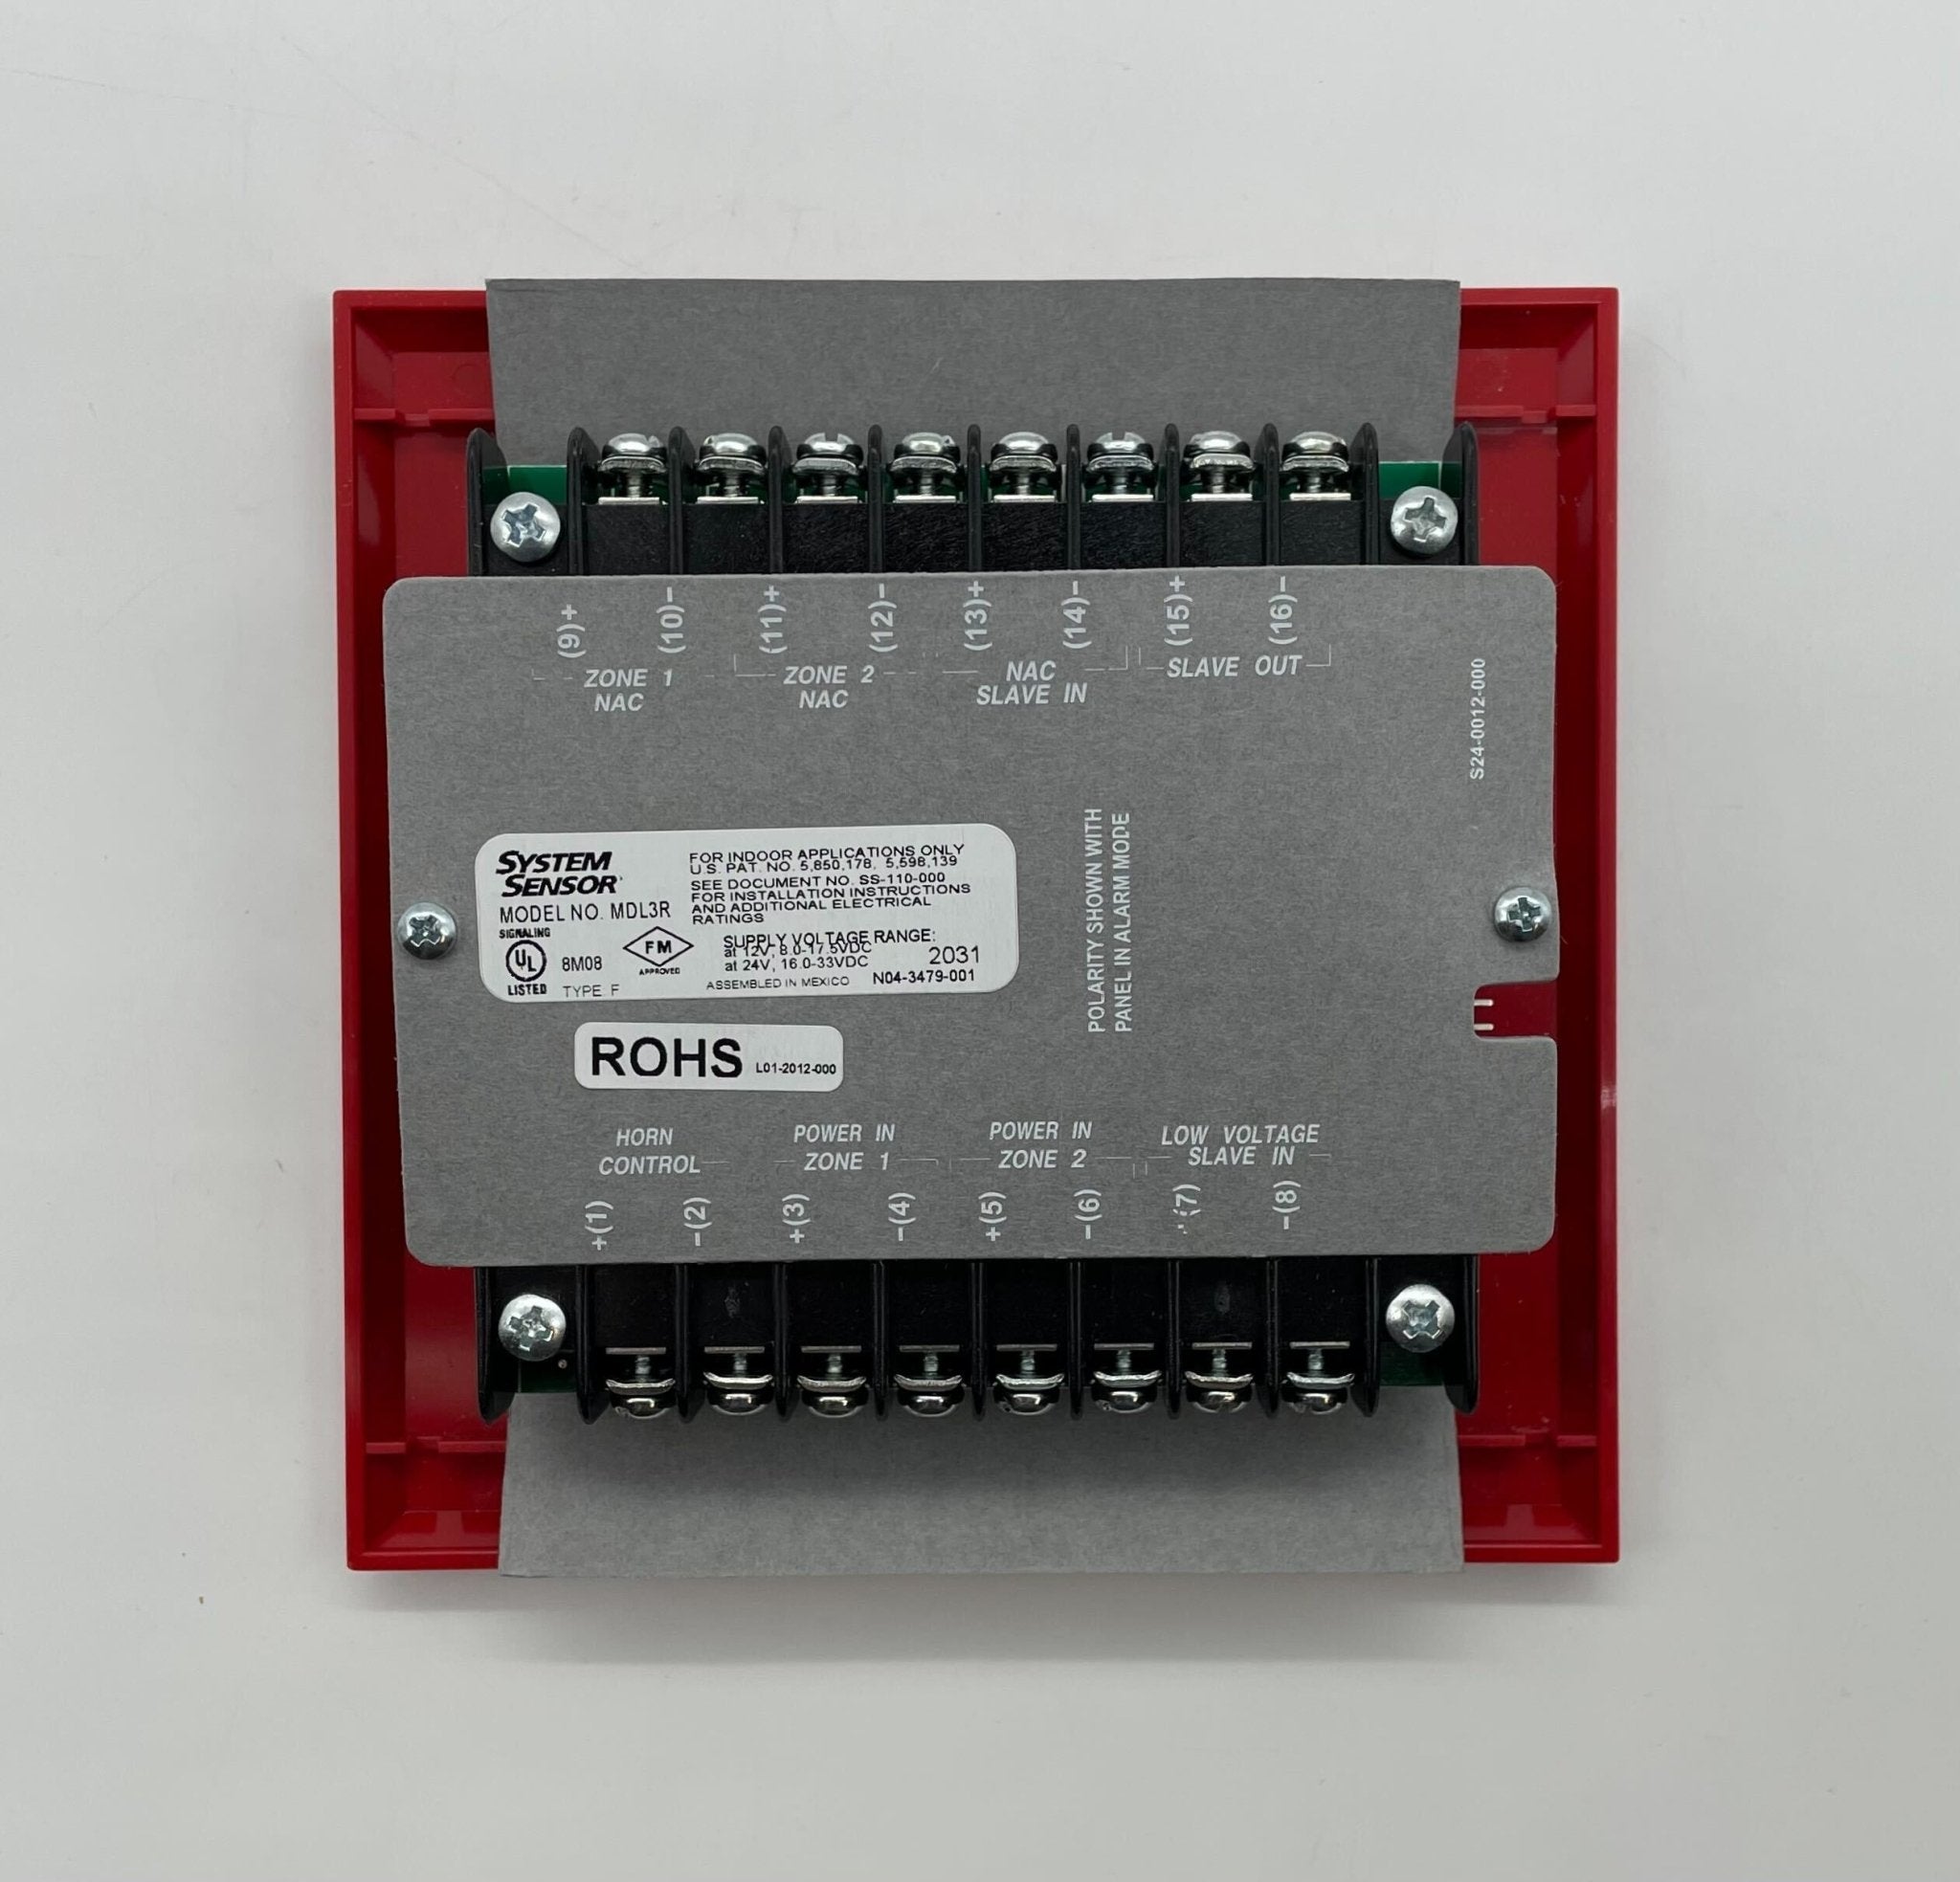 System Sensor MDL3R - The Fire Alarm Supplier